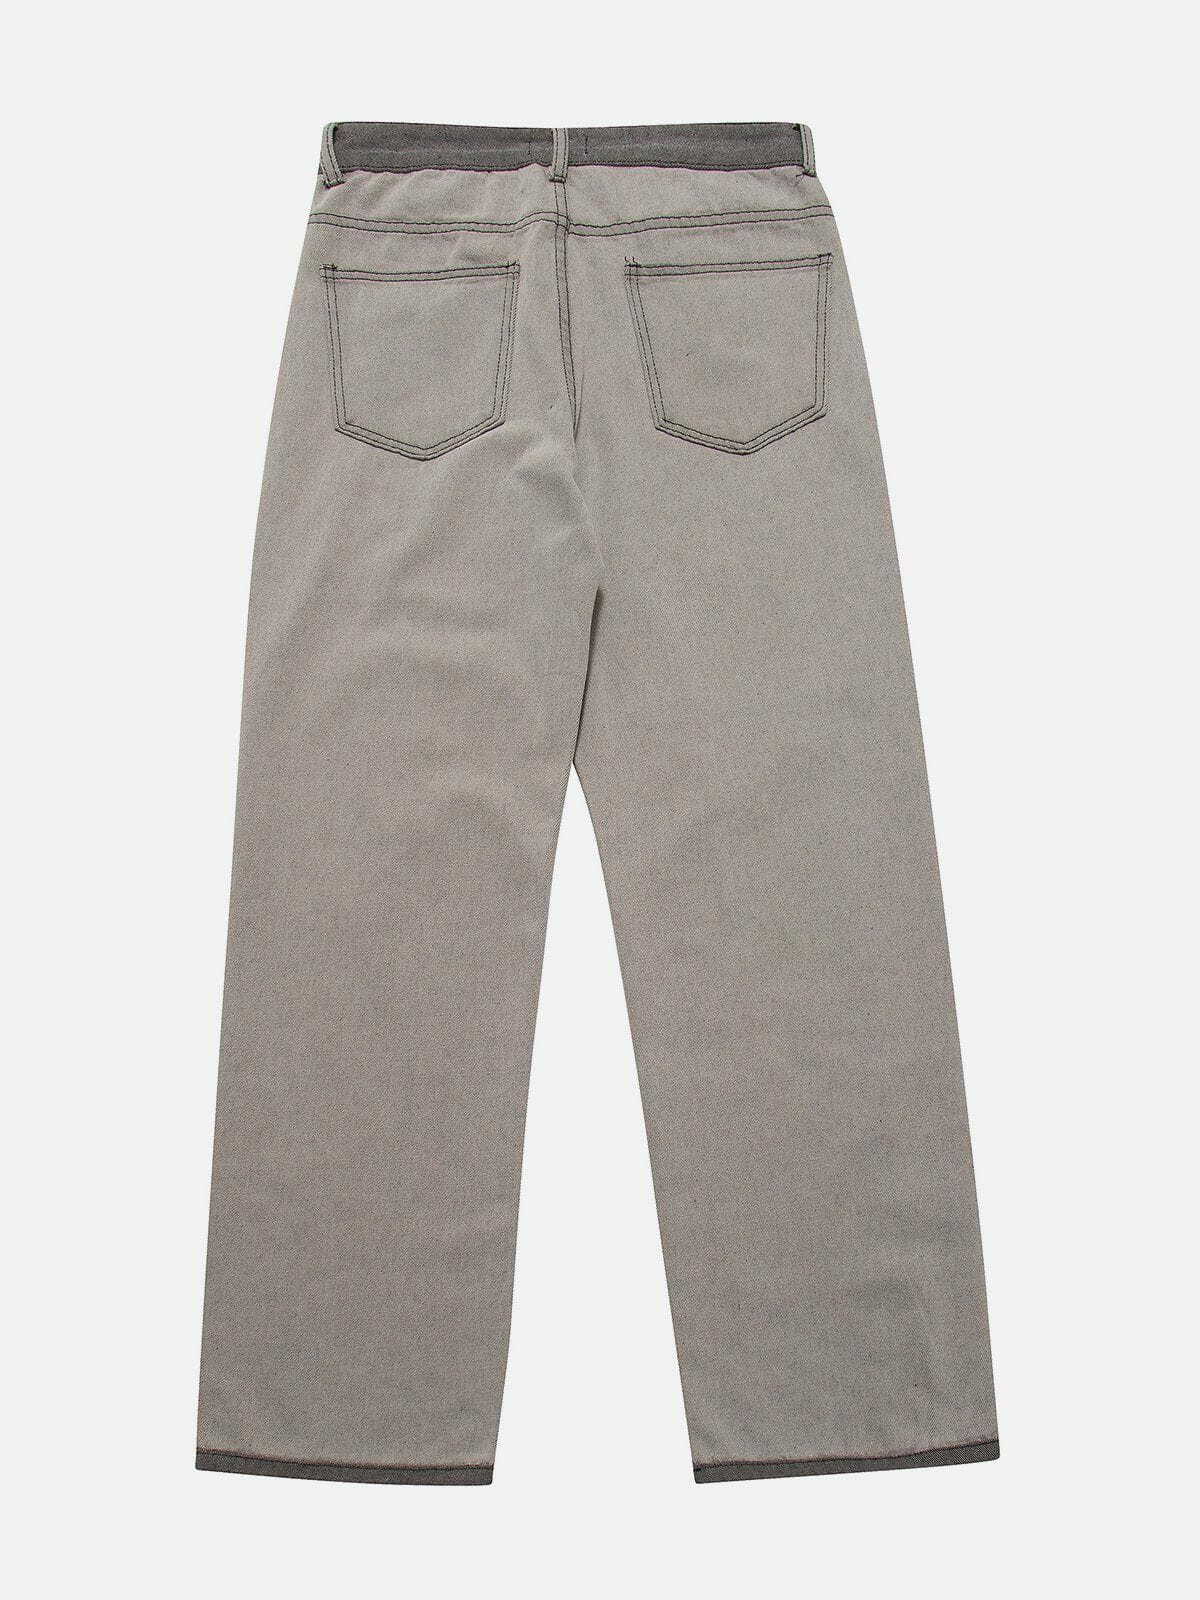 washed hole design jeans edgy & distinctive denim 6880